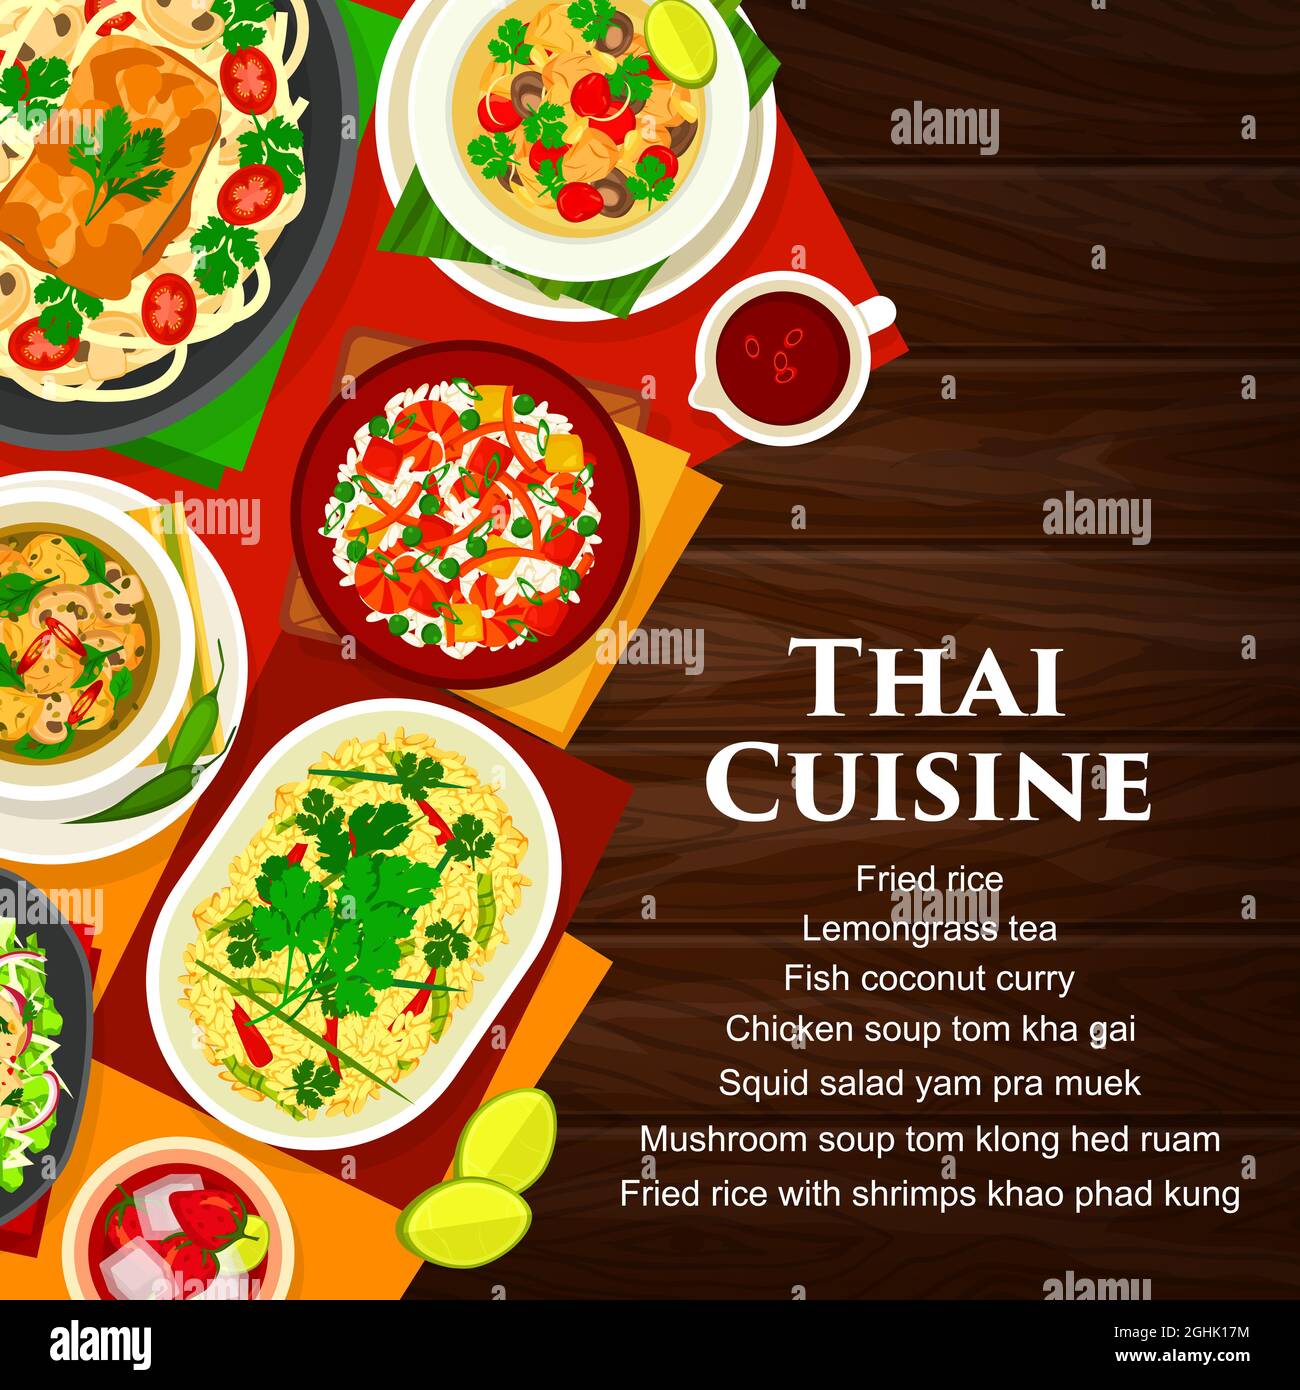 Thailändische Küche Vektor Pilzsuppe tom klong had ruam, Tintenfisch-Salat Yam pra Muek, Hühnersuppe tom Kha Gai. Zitronengrastee, gebratener Reis mit Garnelen khao Stock Vektor